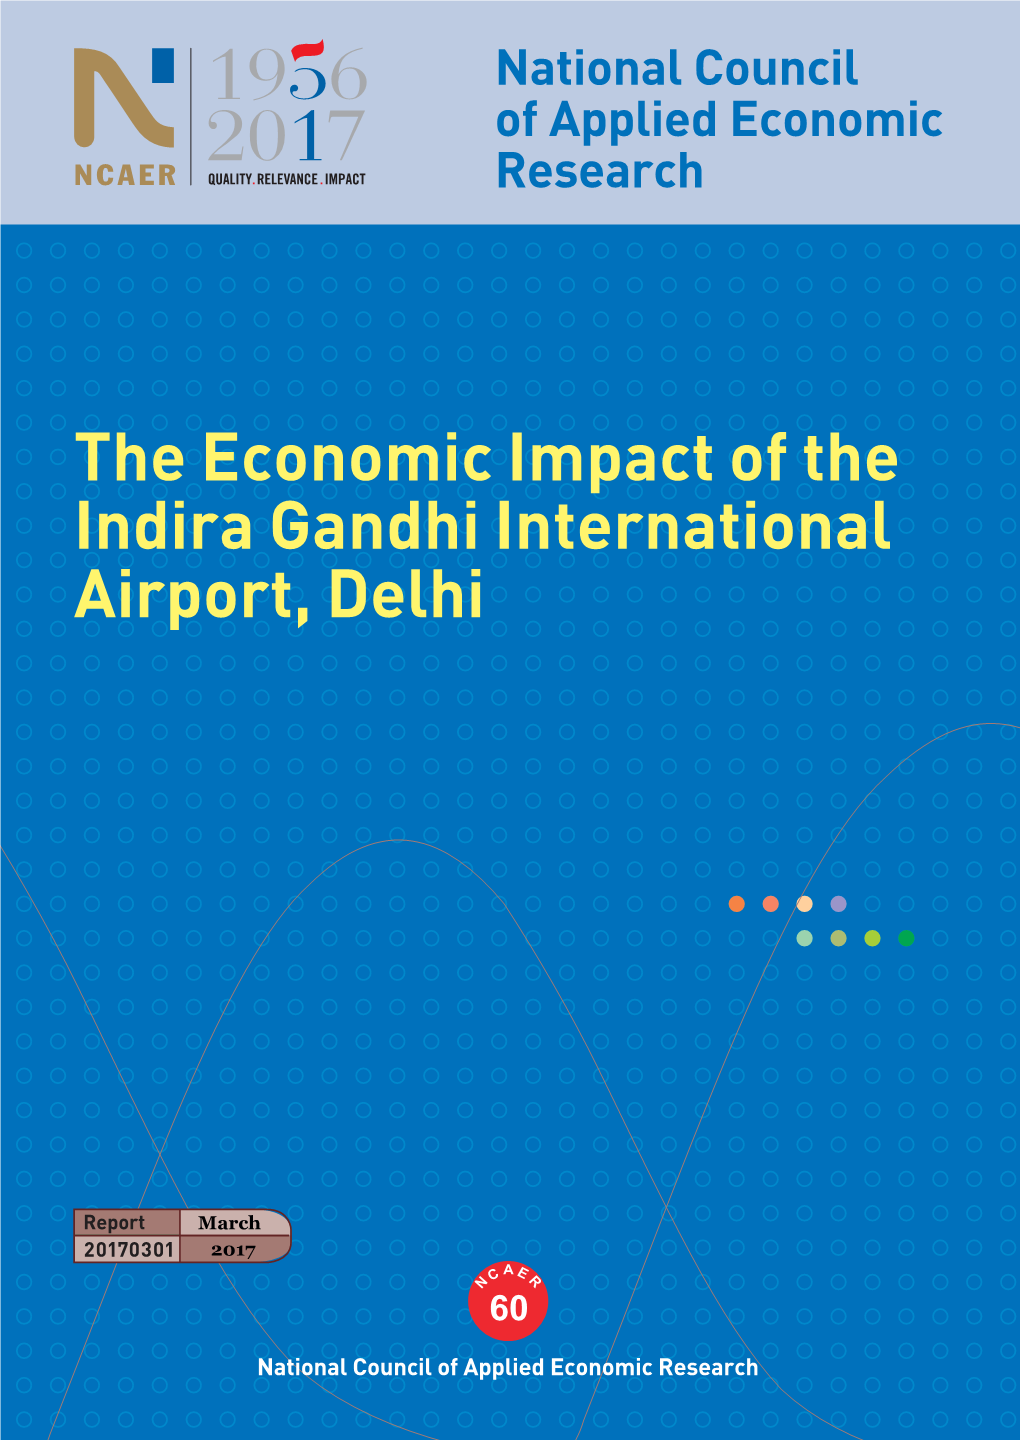 The Economic Impact of the Indira Gandhi International Airport, Delhi